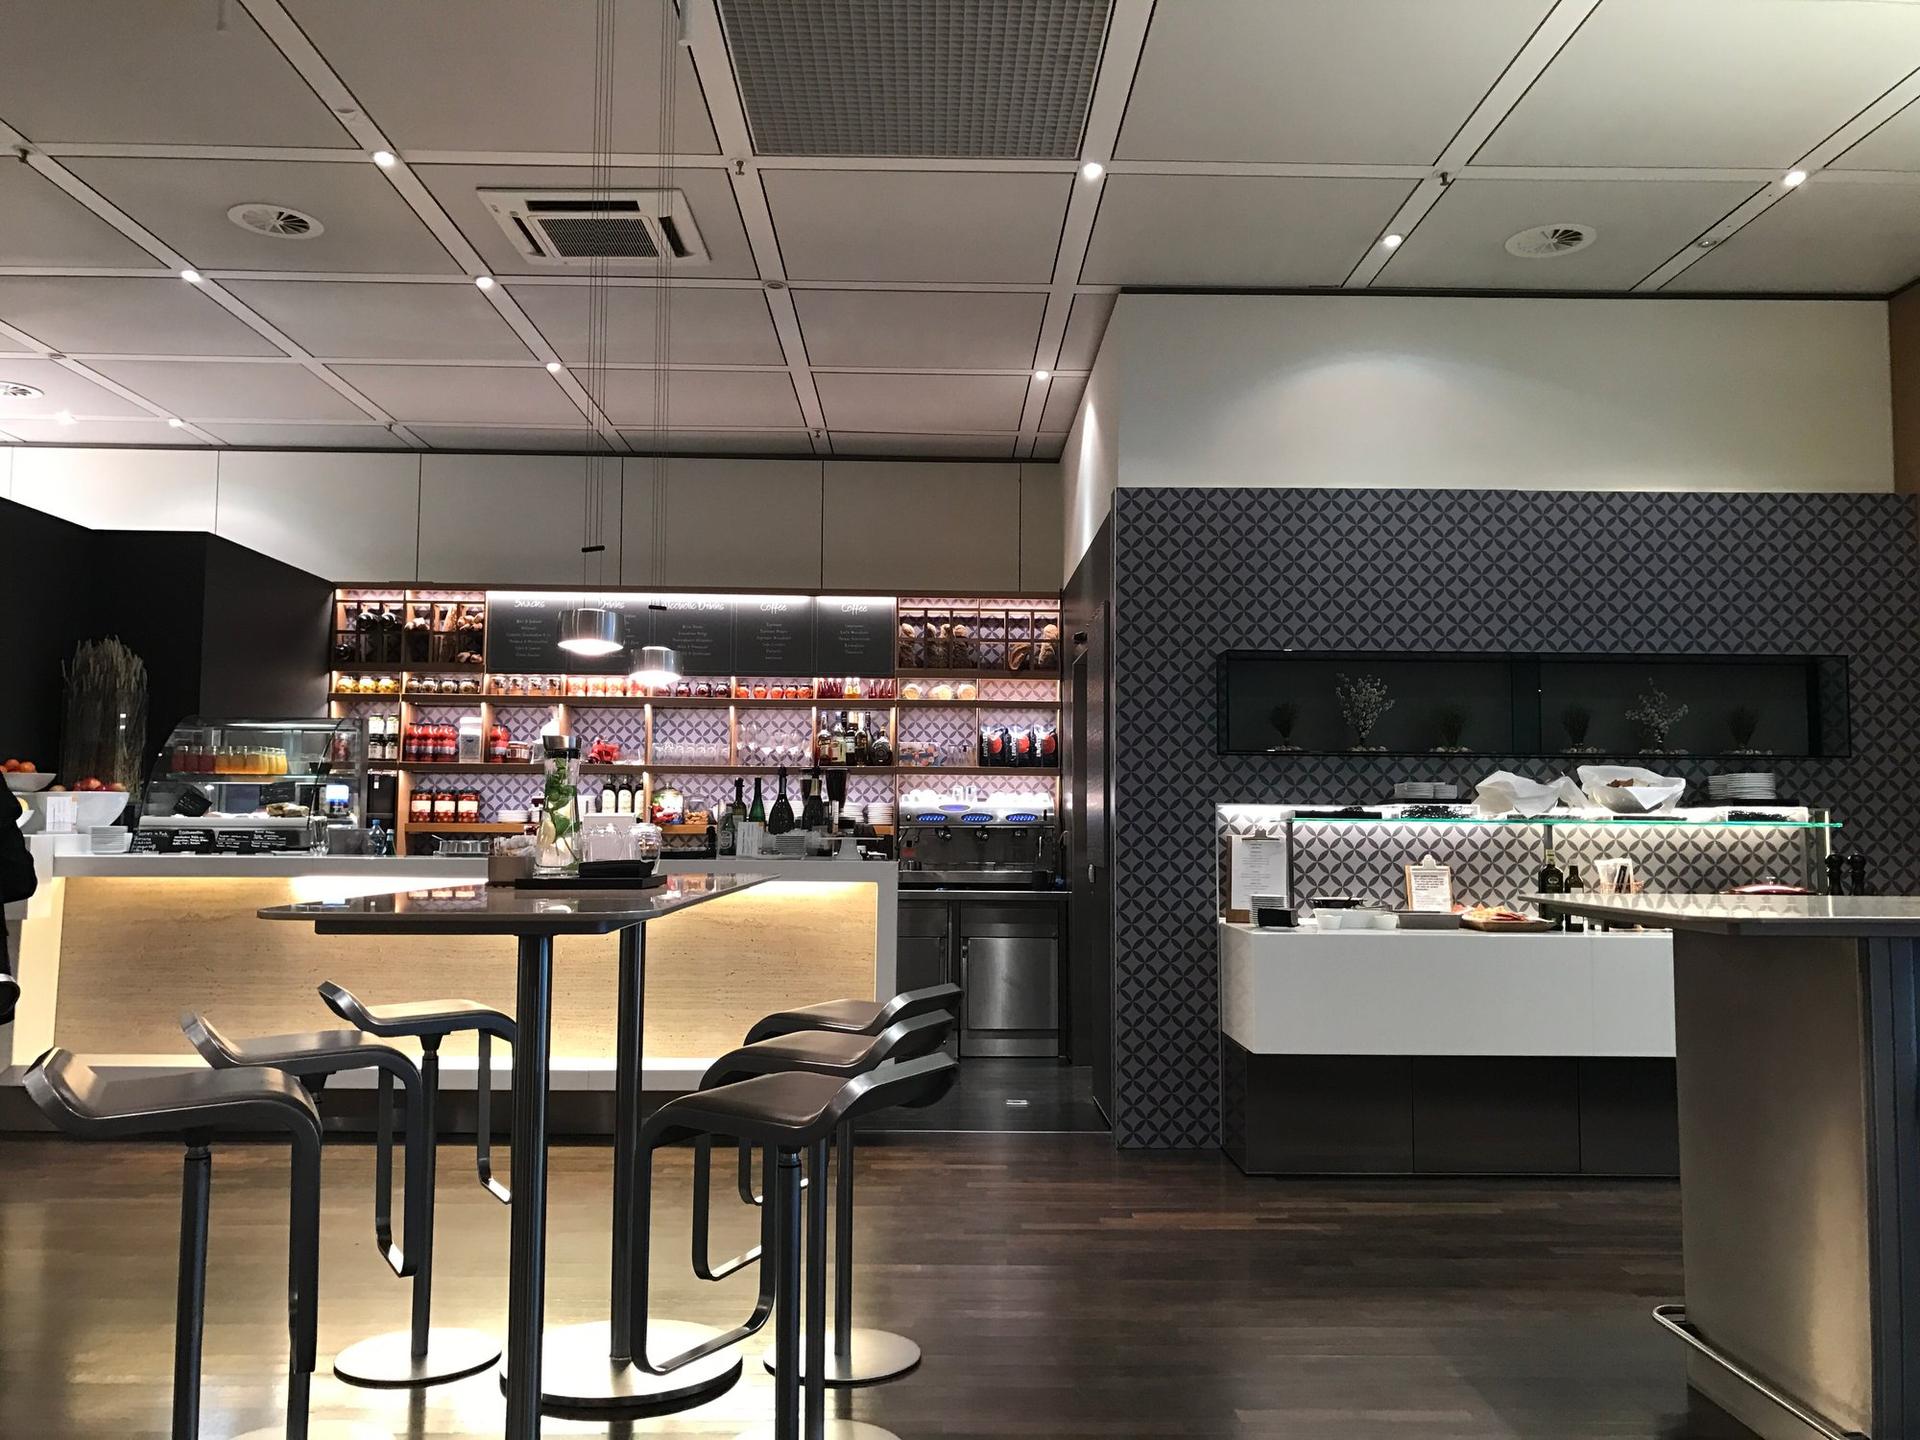 Lufthansa Senator Café Lounge (Schengen) image 5 of 6